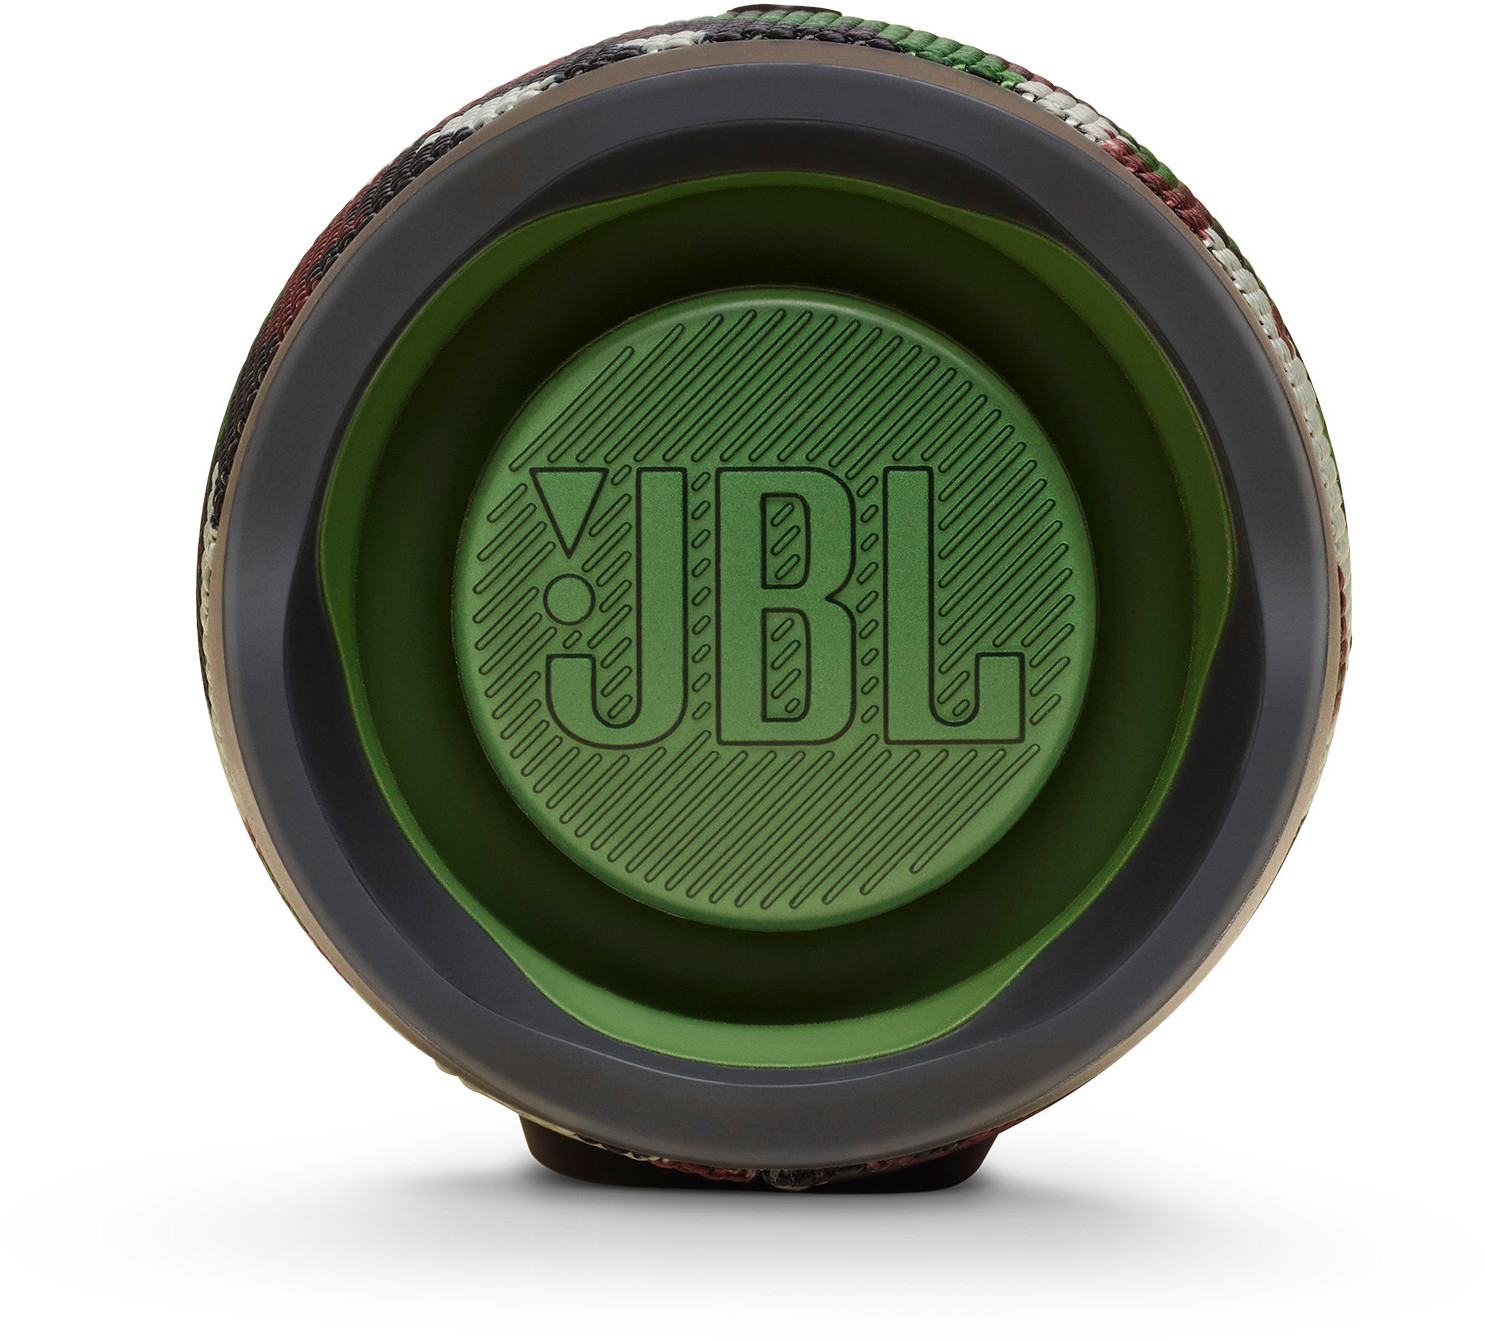 JBL Charge Lautsprecher, 4 Wasserfest Squad Camouflage, Edition Bluetooth